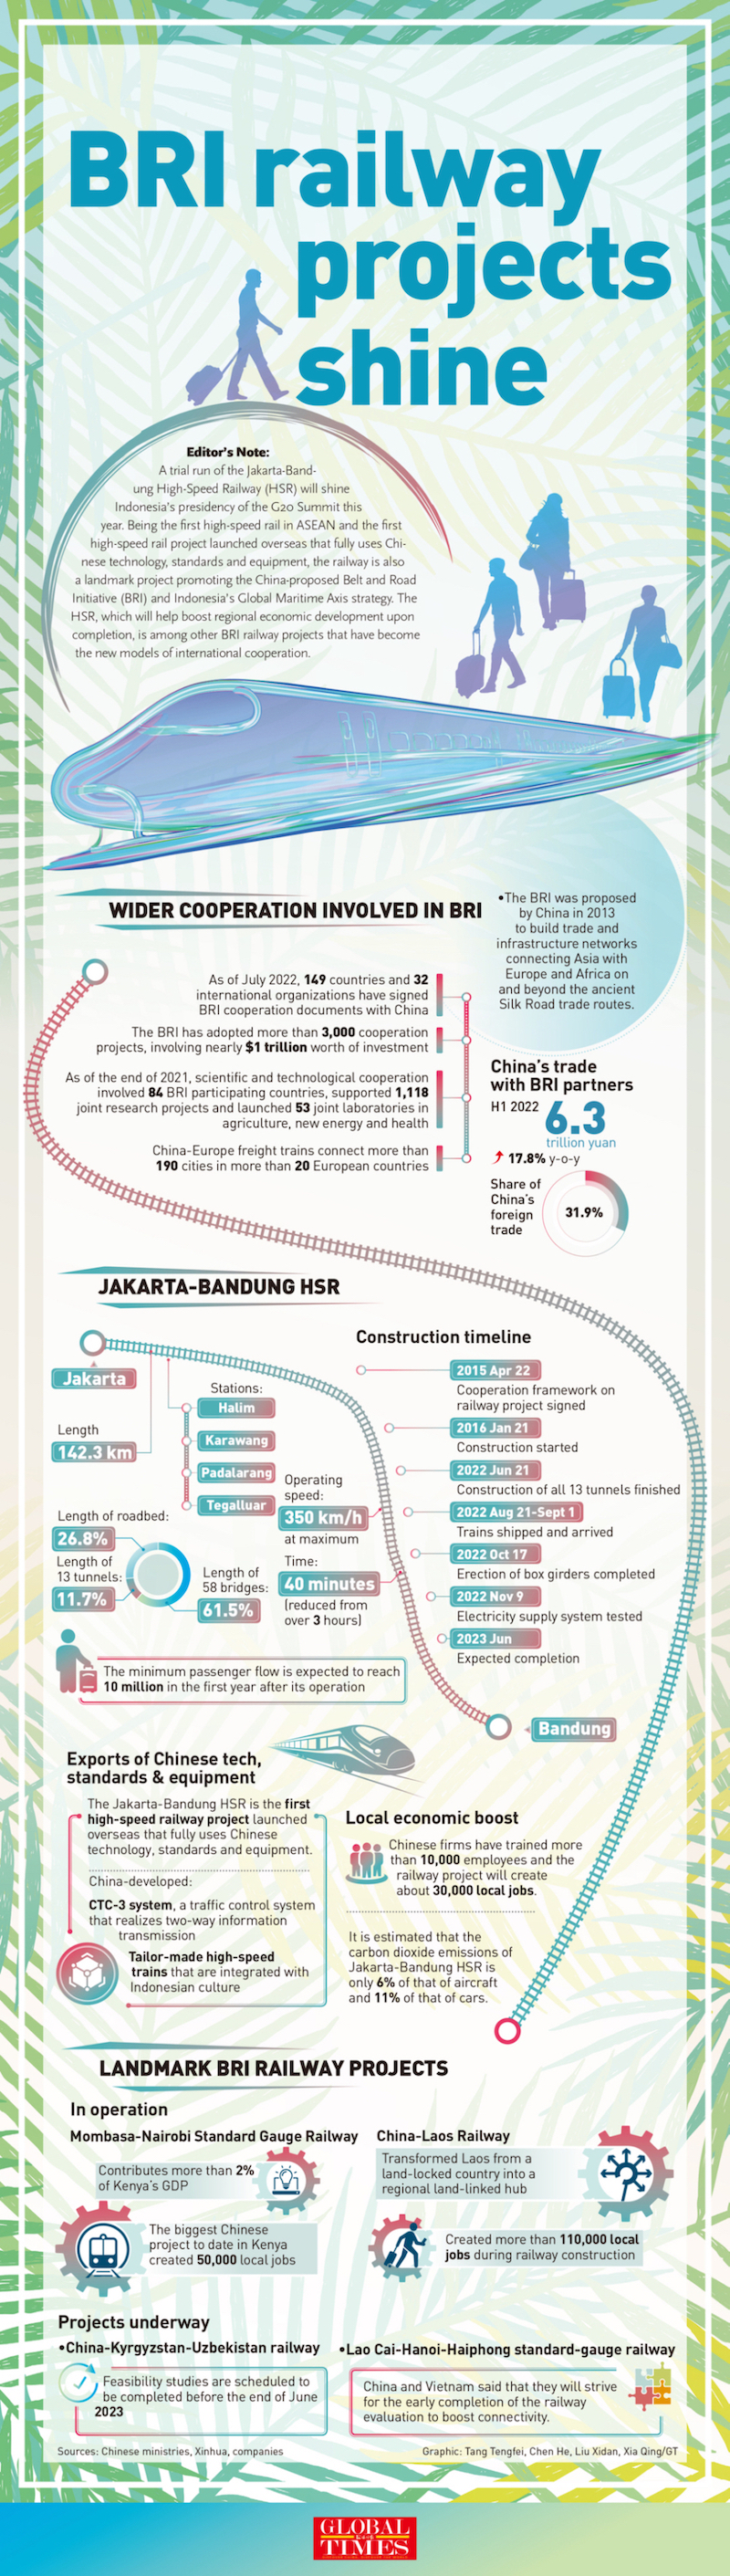 Jakarta-Bandung High-Speed Railway, a landmark of BRI railway projects Infographic: GT